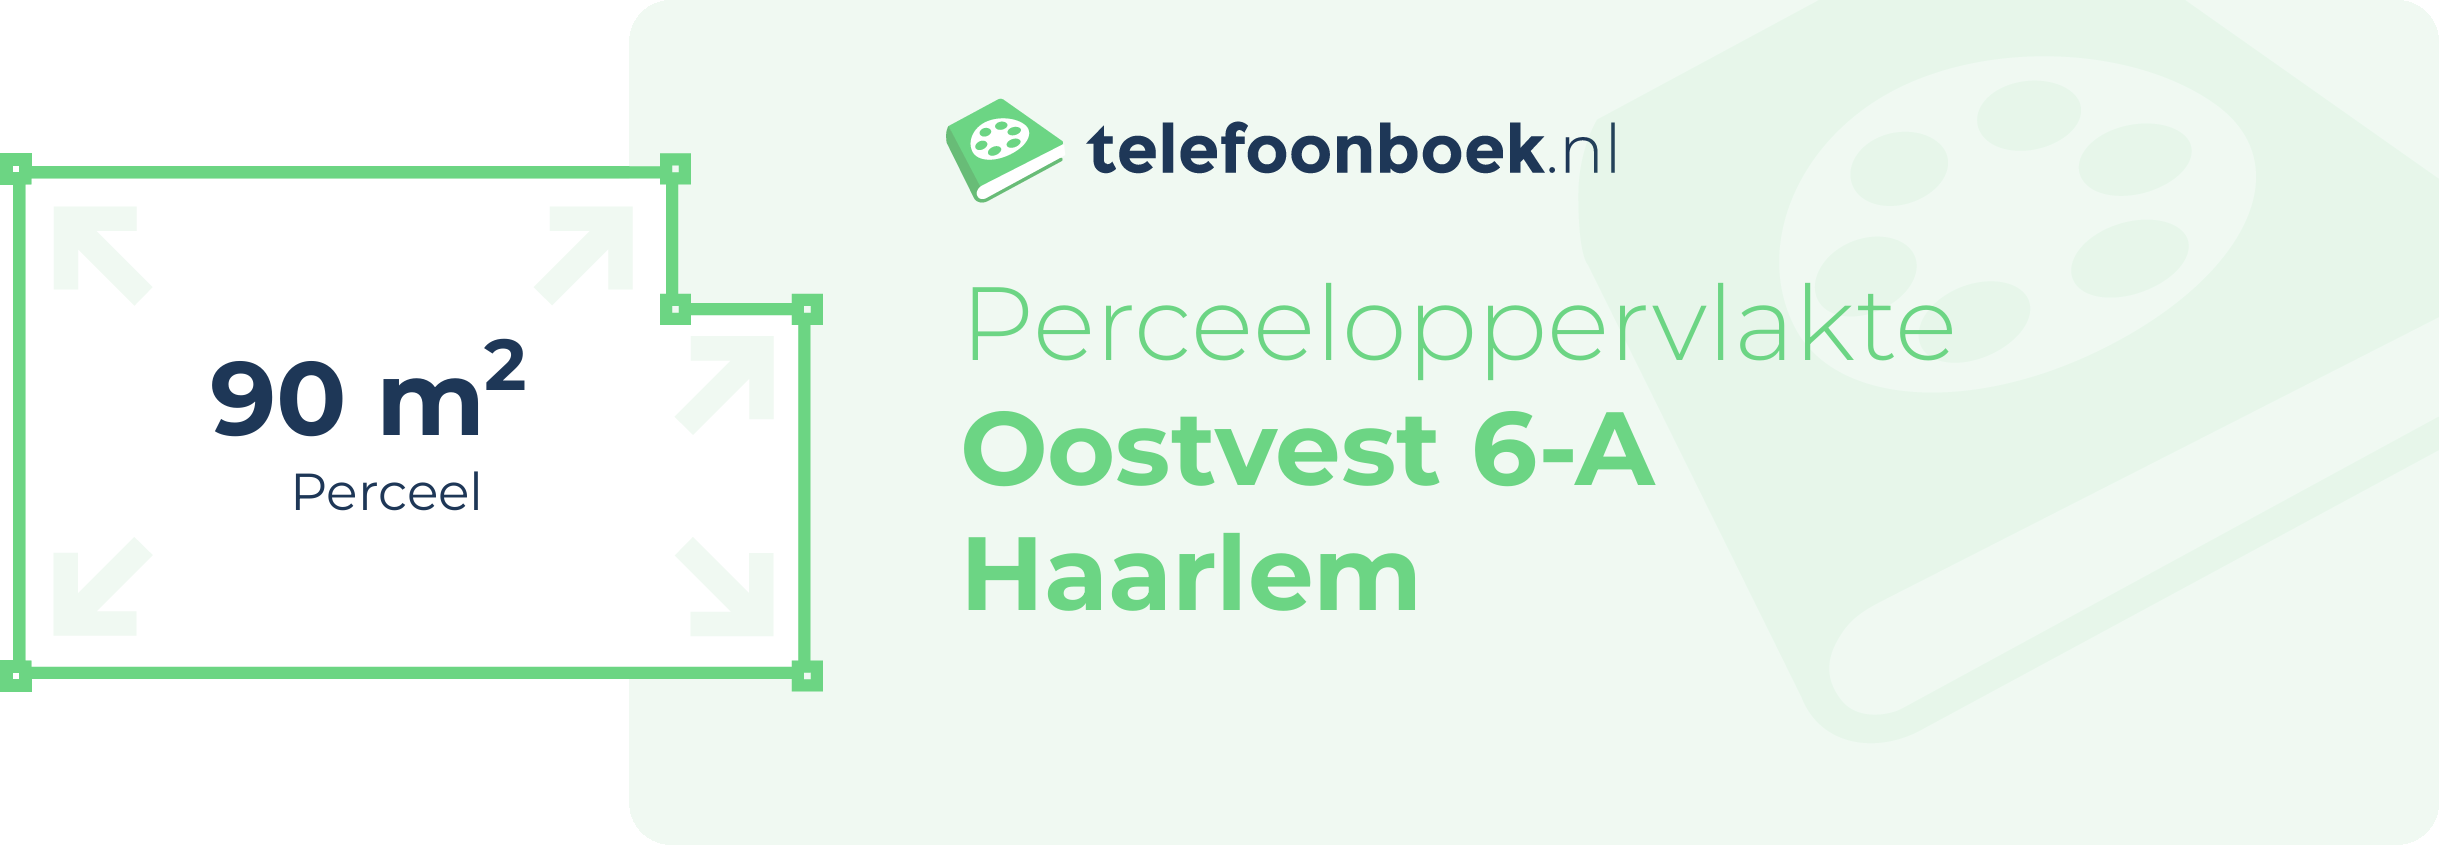 Perceeloppervlakte Oostvest 6-A Haarlem